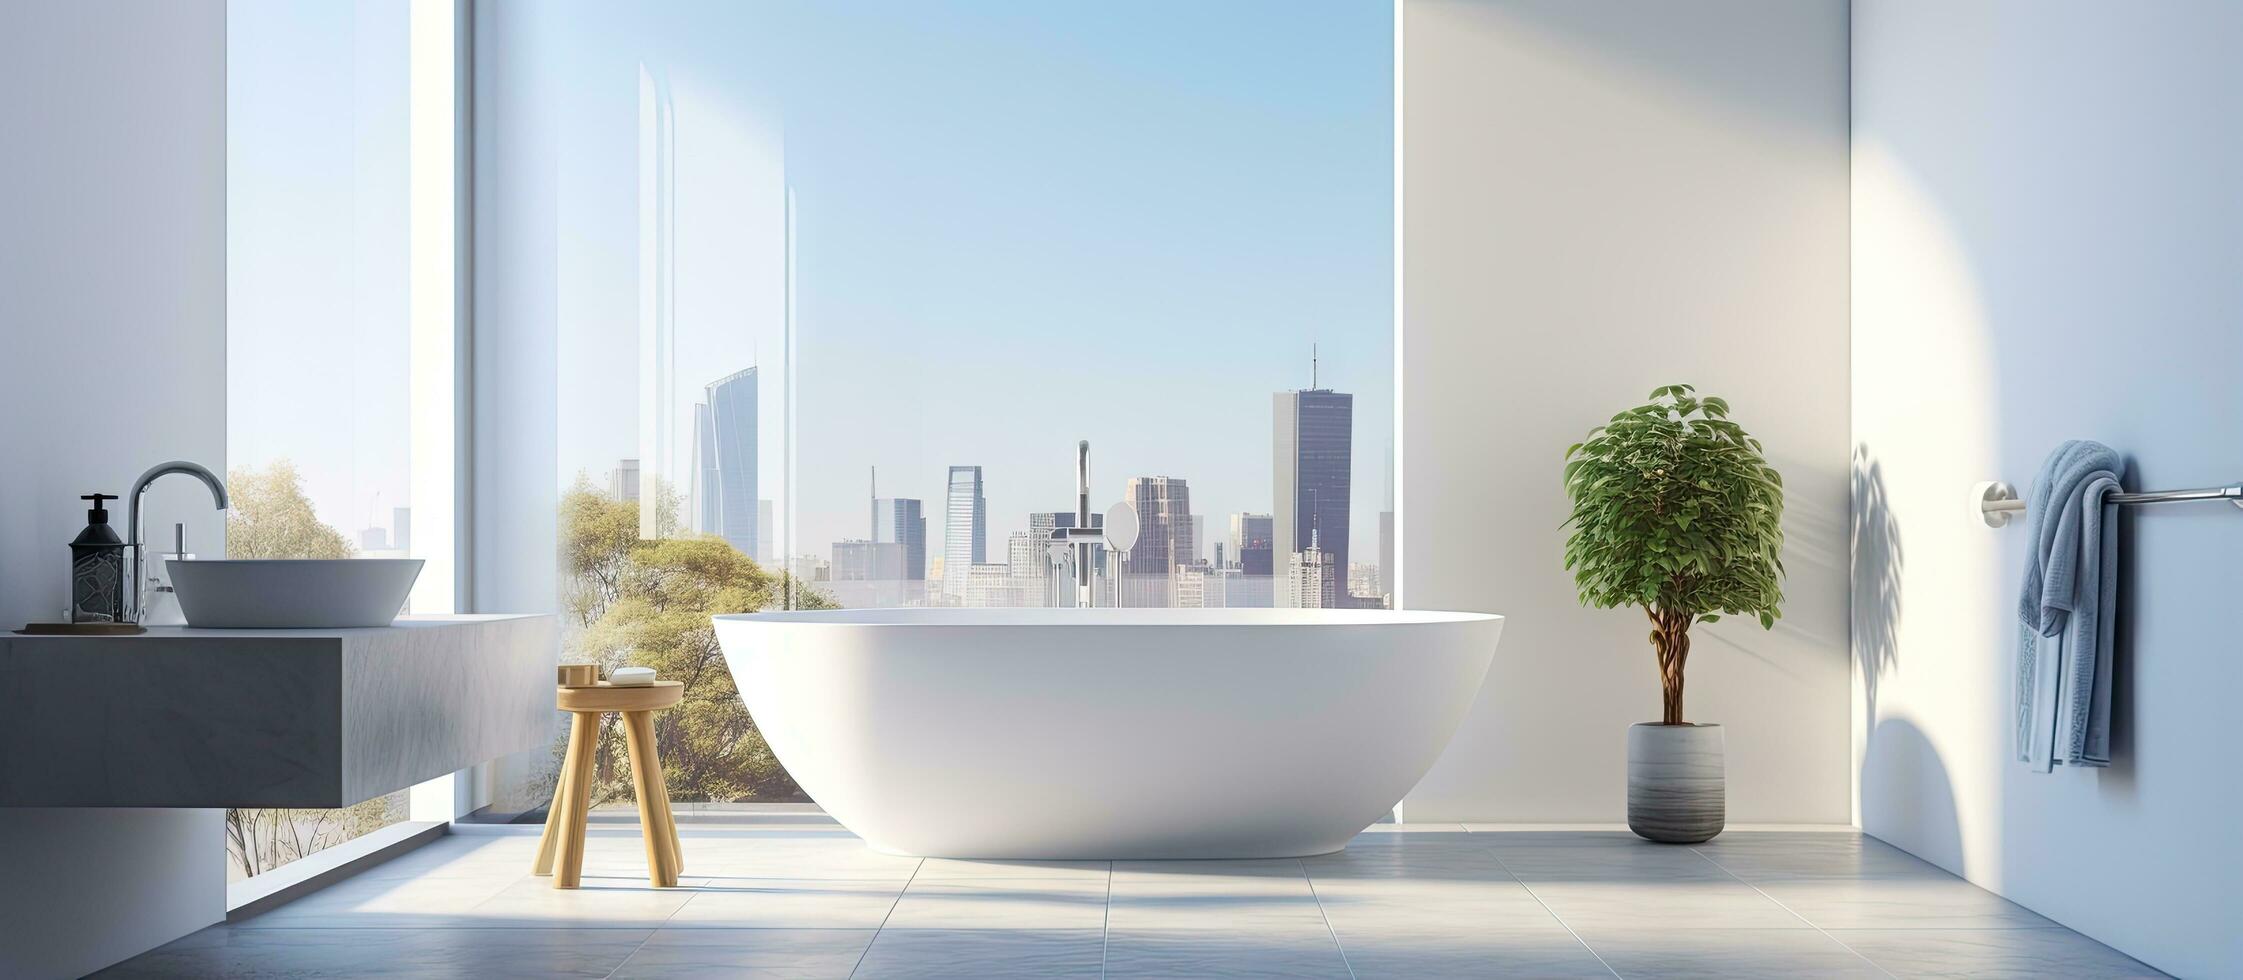 ed bright bathroom with bathtub stool towel shampoo panoramic window city skyscrapers view white walls concrete tile floor photo